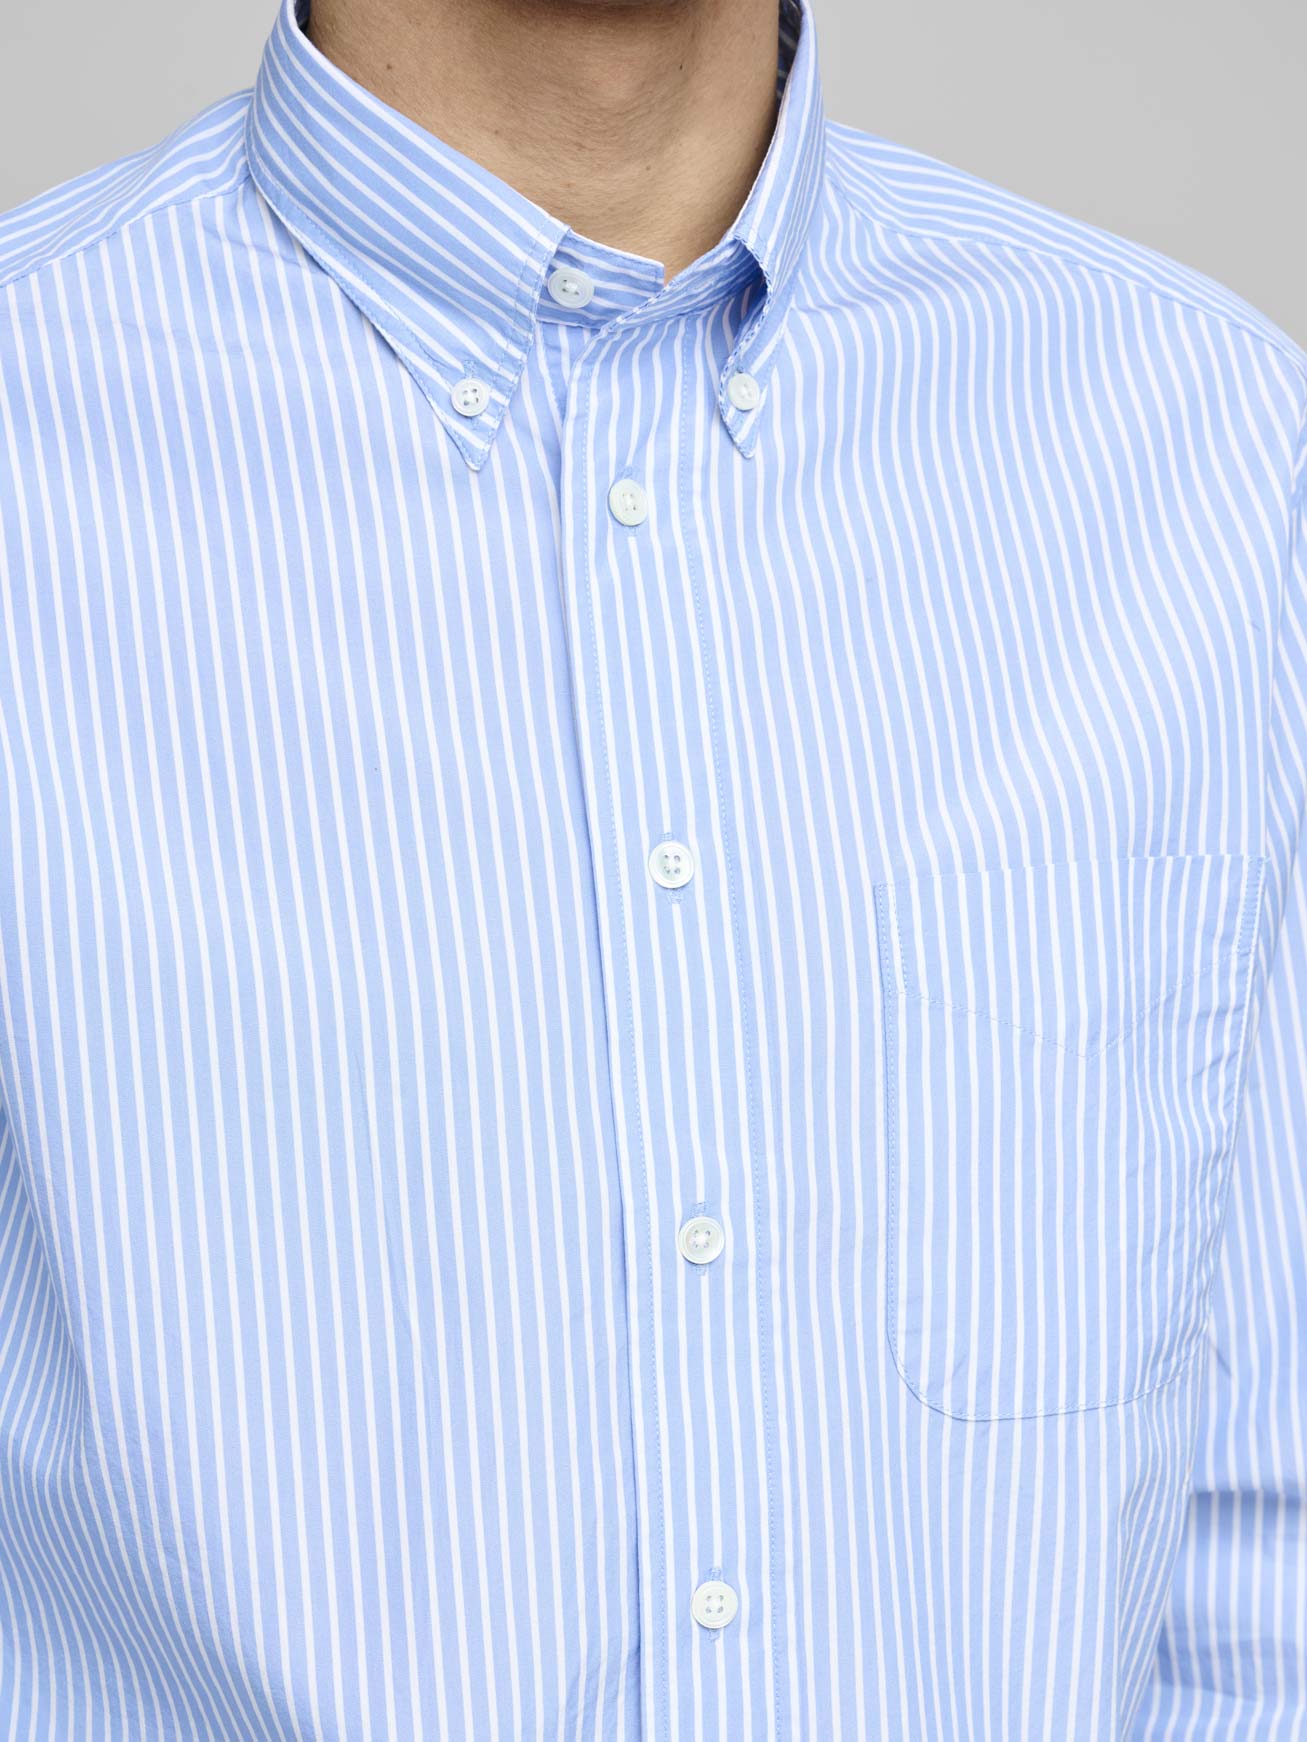 American BD Shirt, Light Blue & White Stripe